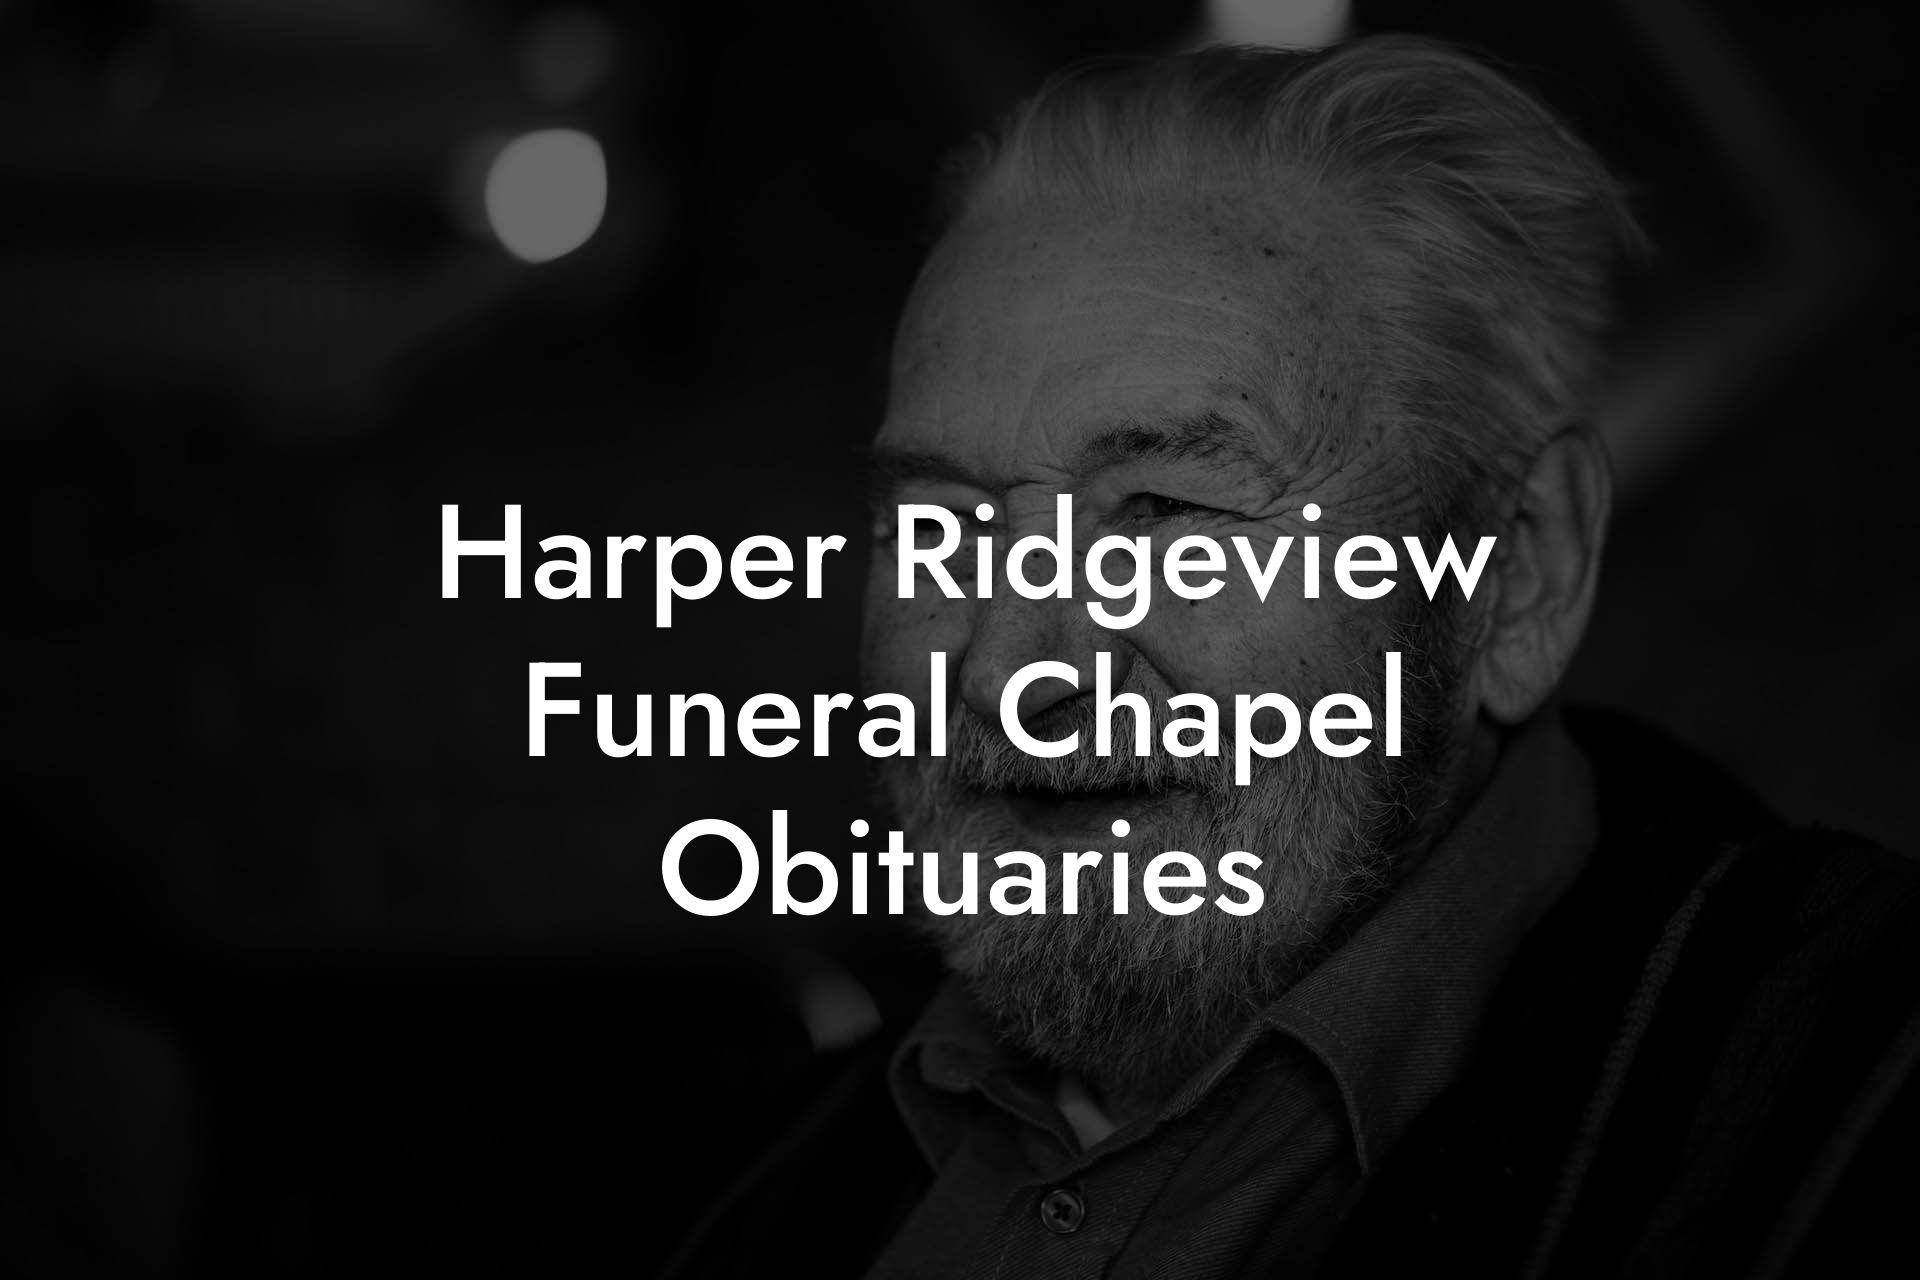 Harper Ridgeview Funeral Chapel Obituaries